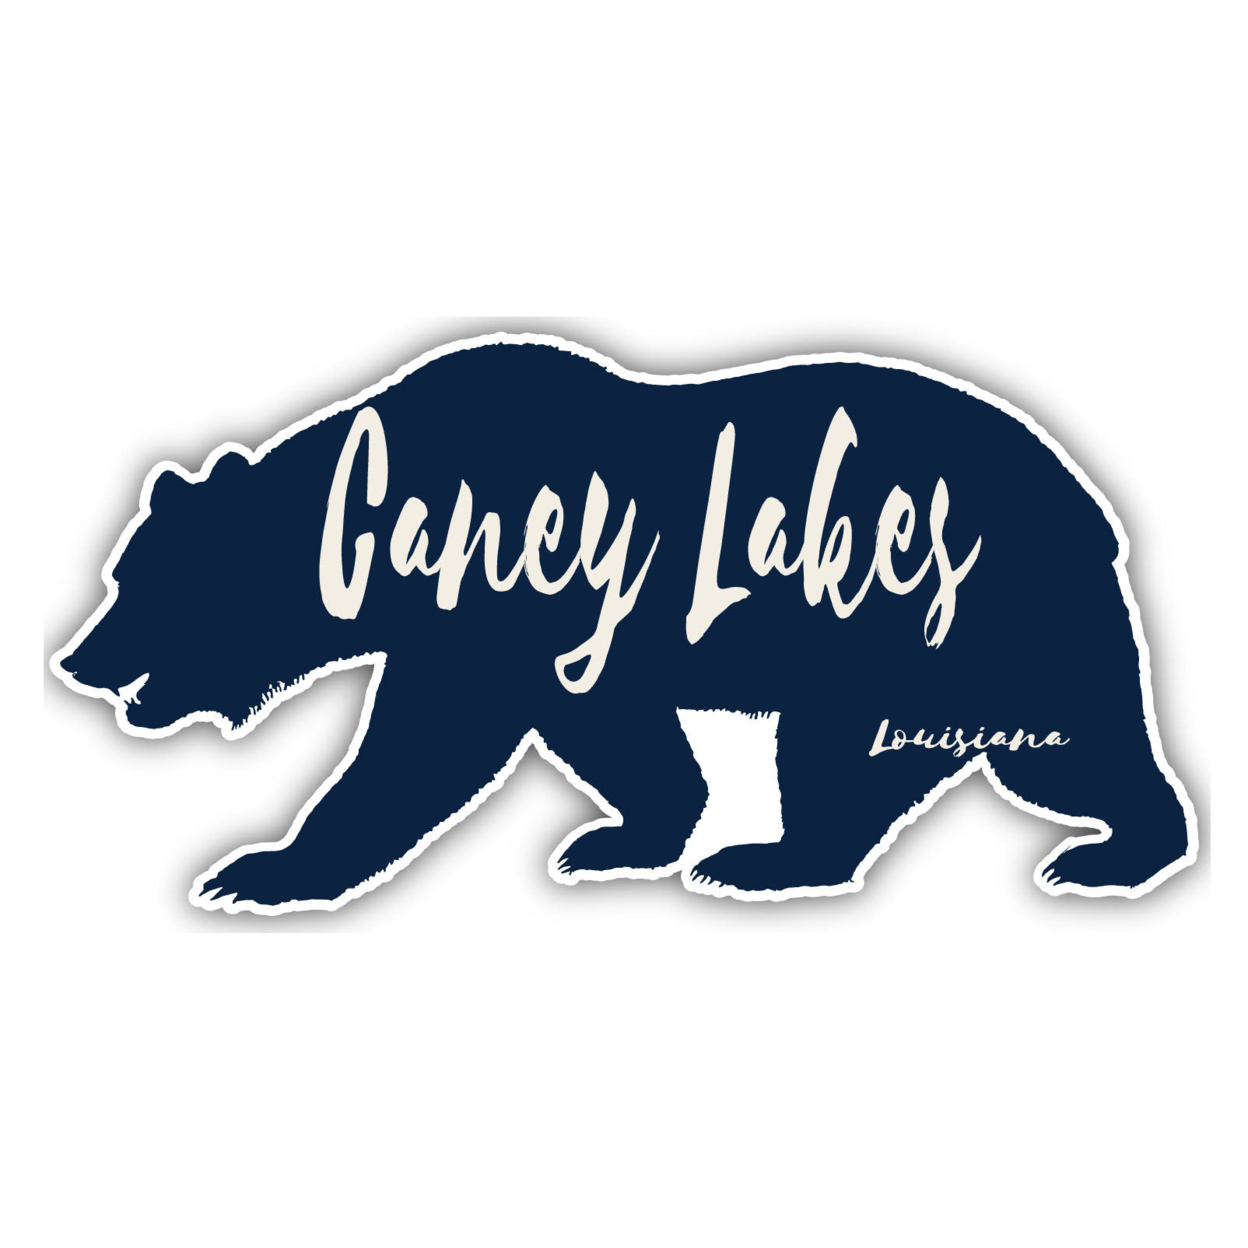 Caney Lakes Louisiana Souvenir Decorative Stickers (Choose Theme And Size) - Single Unit, 2-Inch, Bear